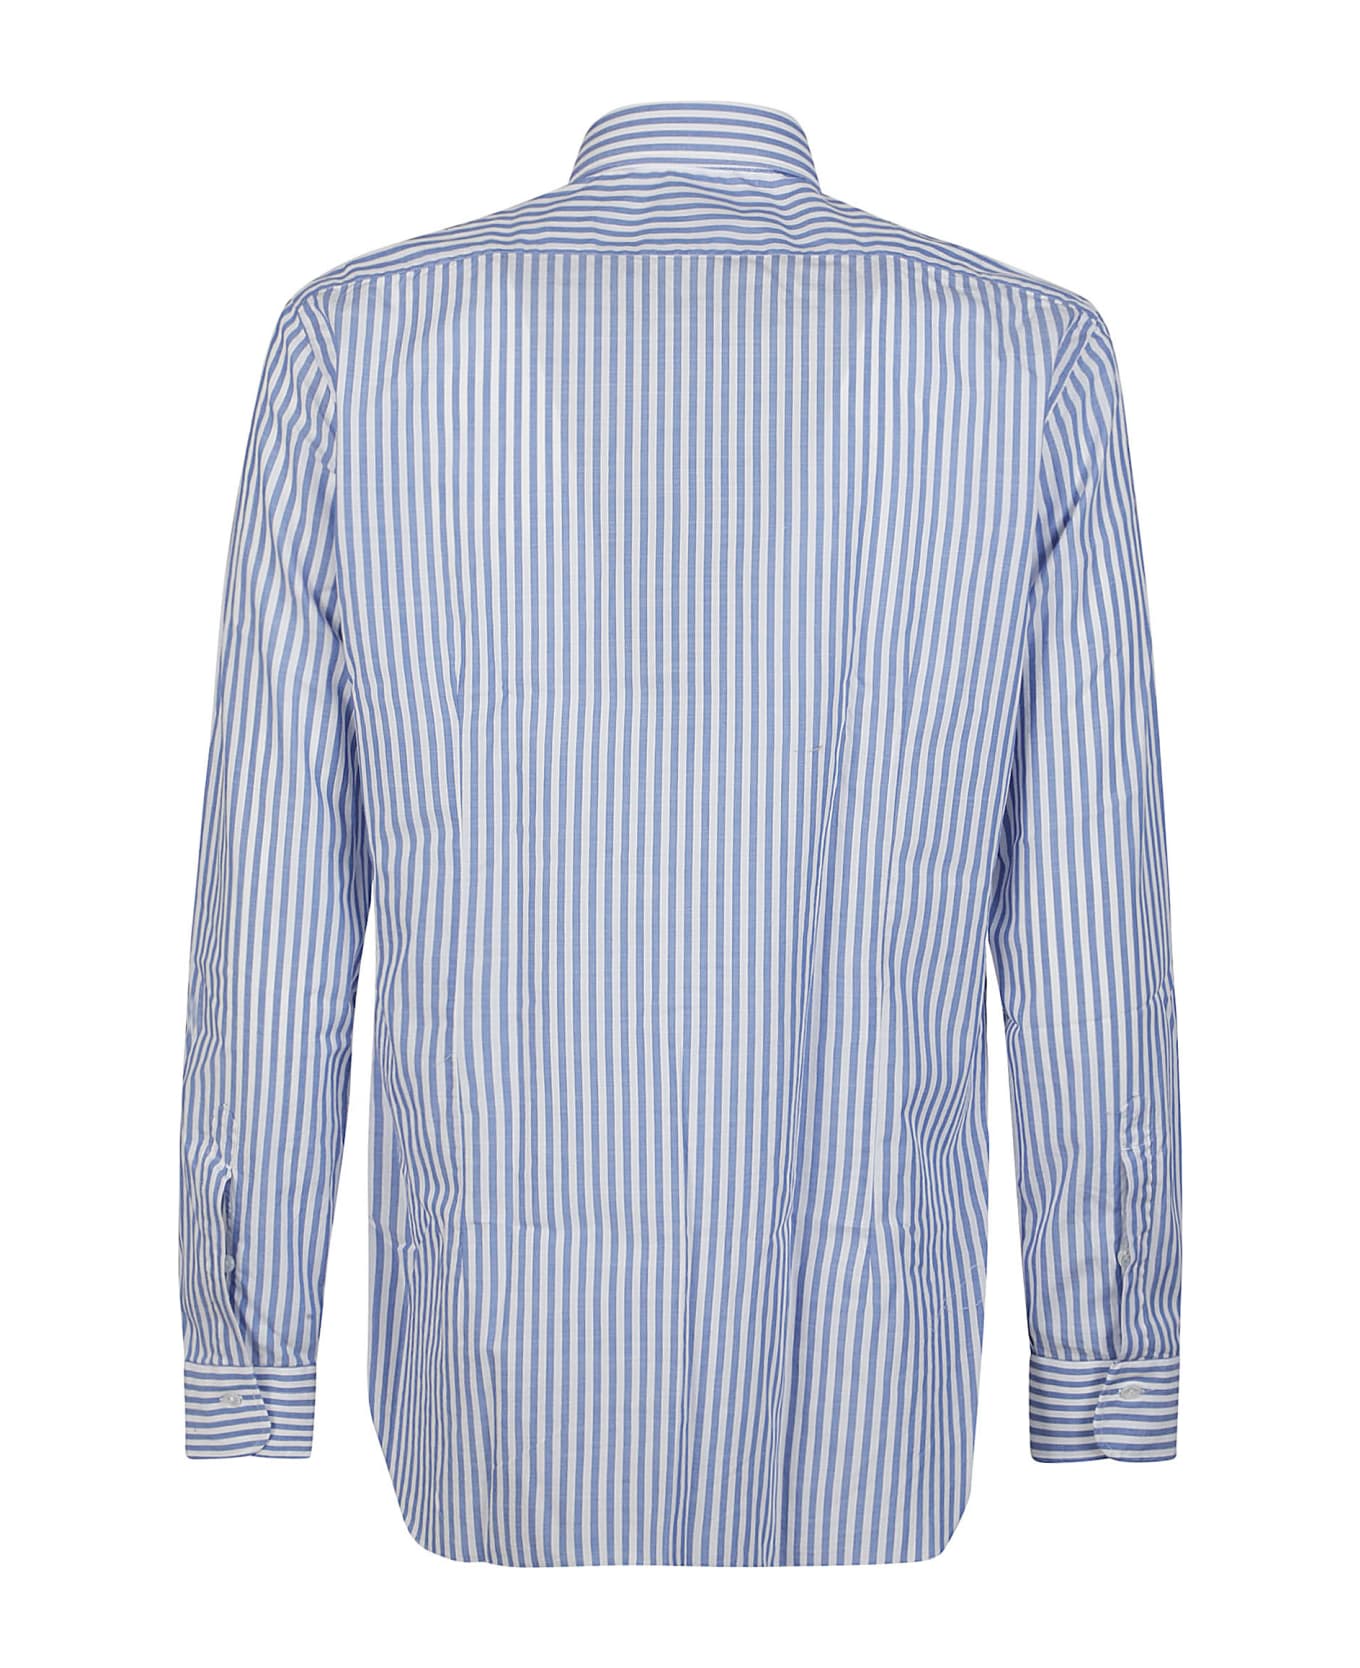 Barba Napoli Neck Shirt - Bianco/azzurro シャツ